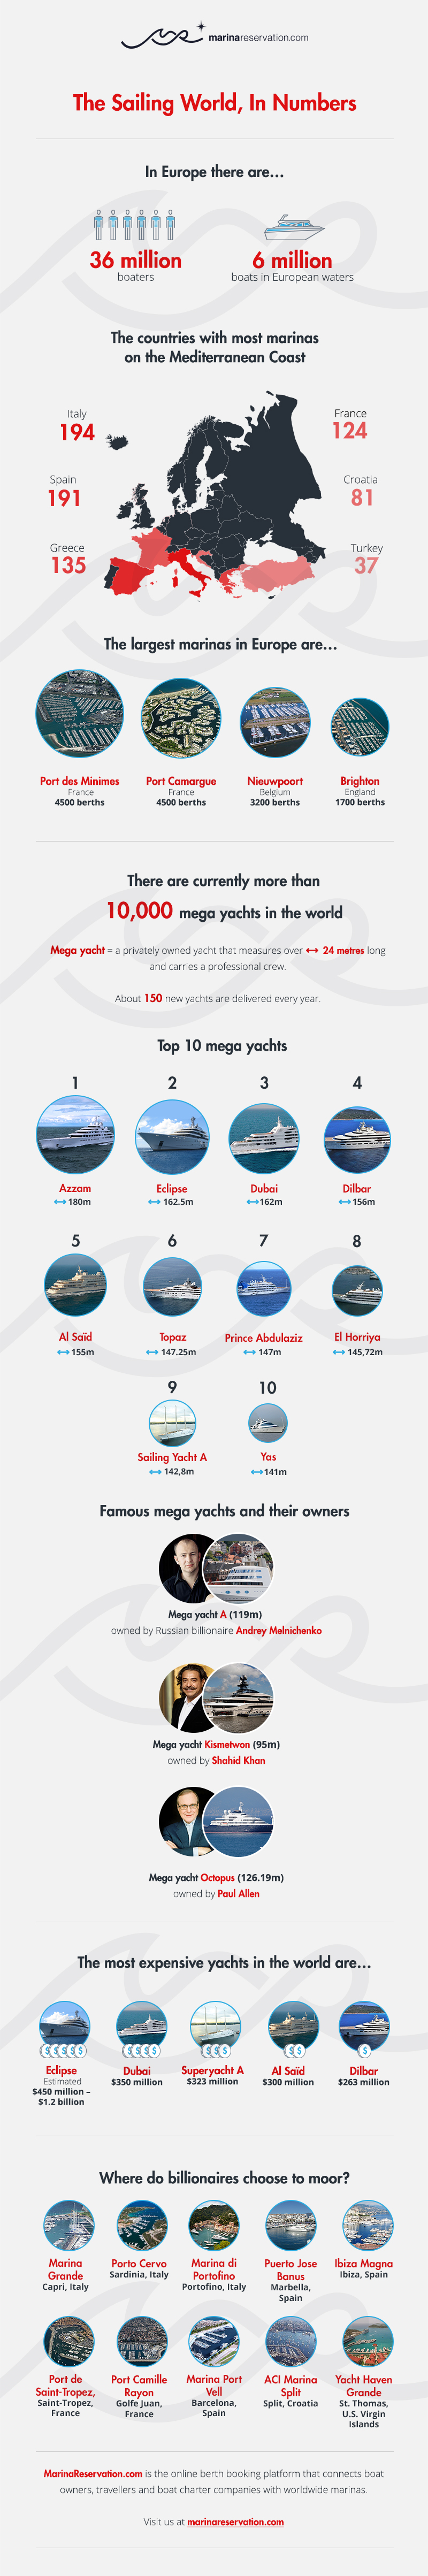 marinareservation_infographic